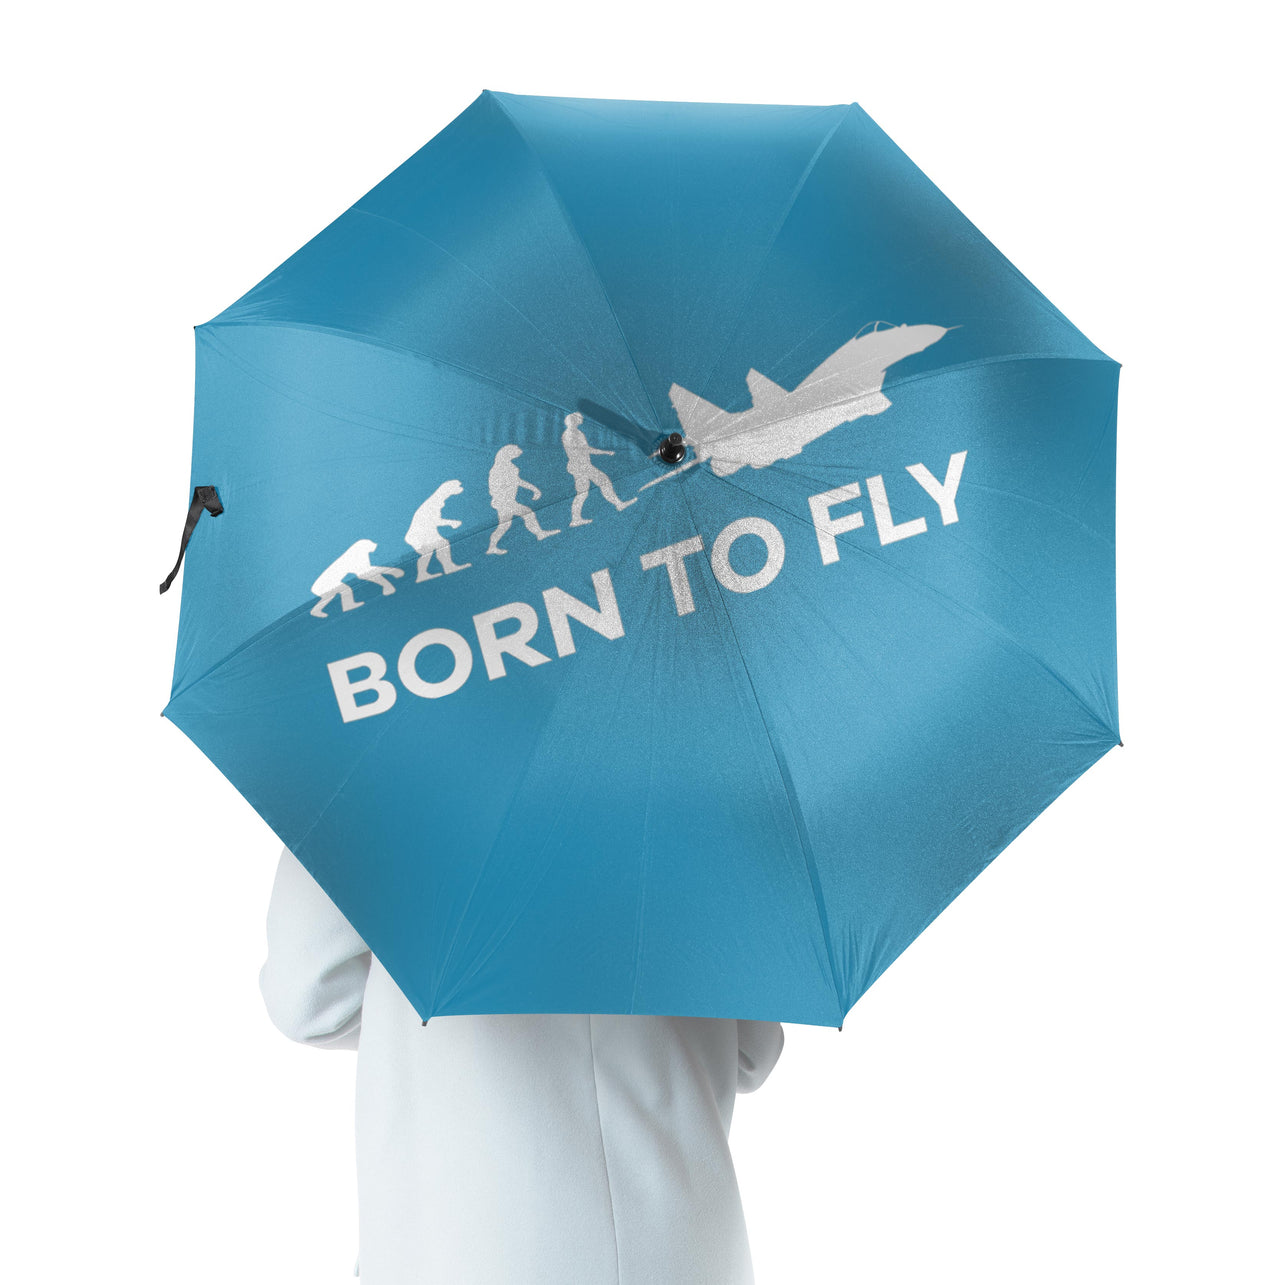 Born To Fly Military Designed Umbrella